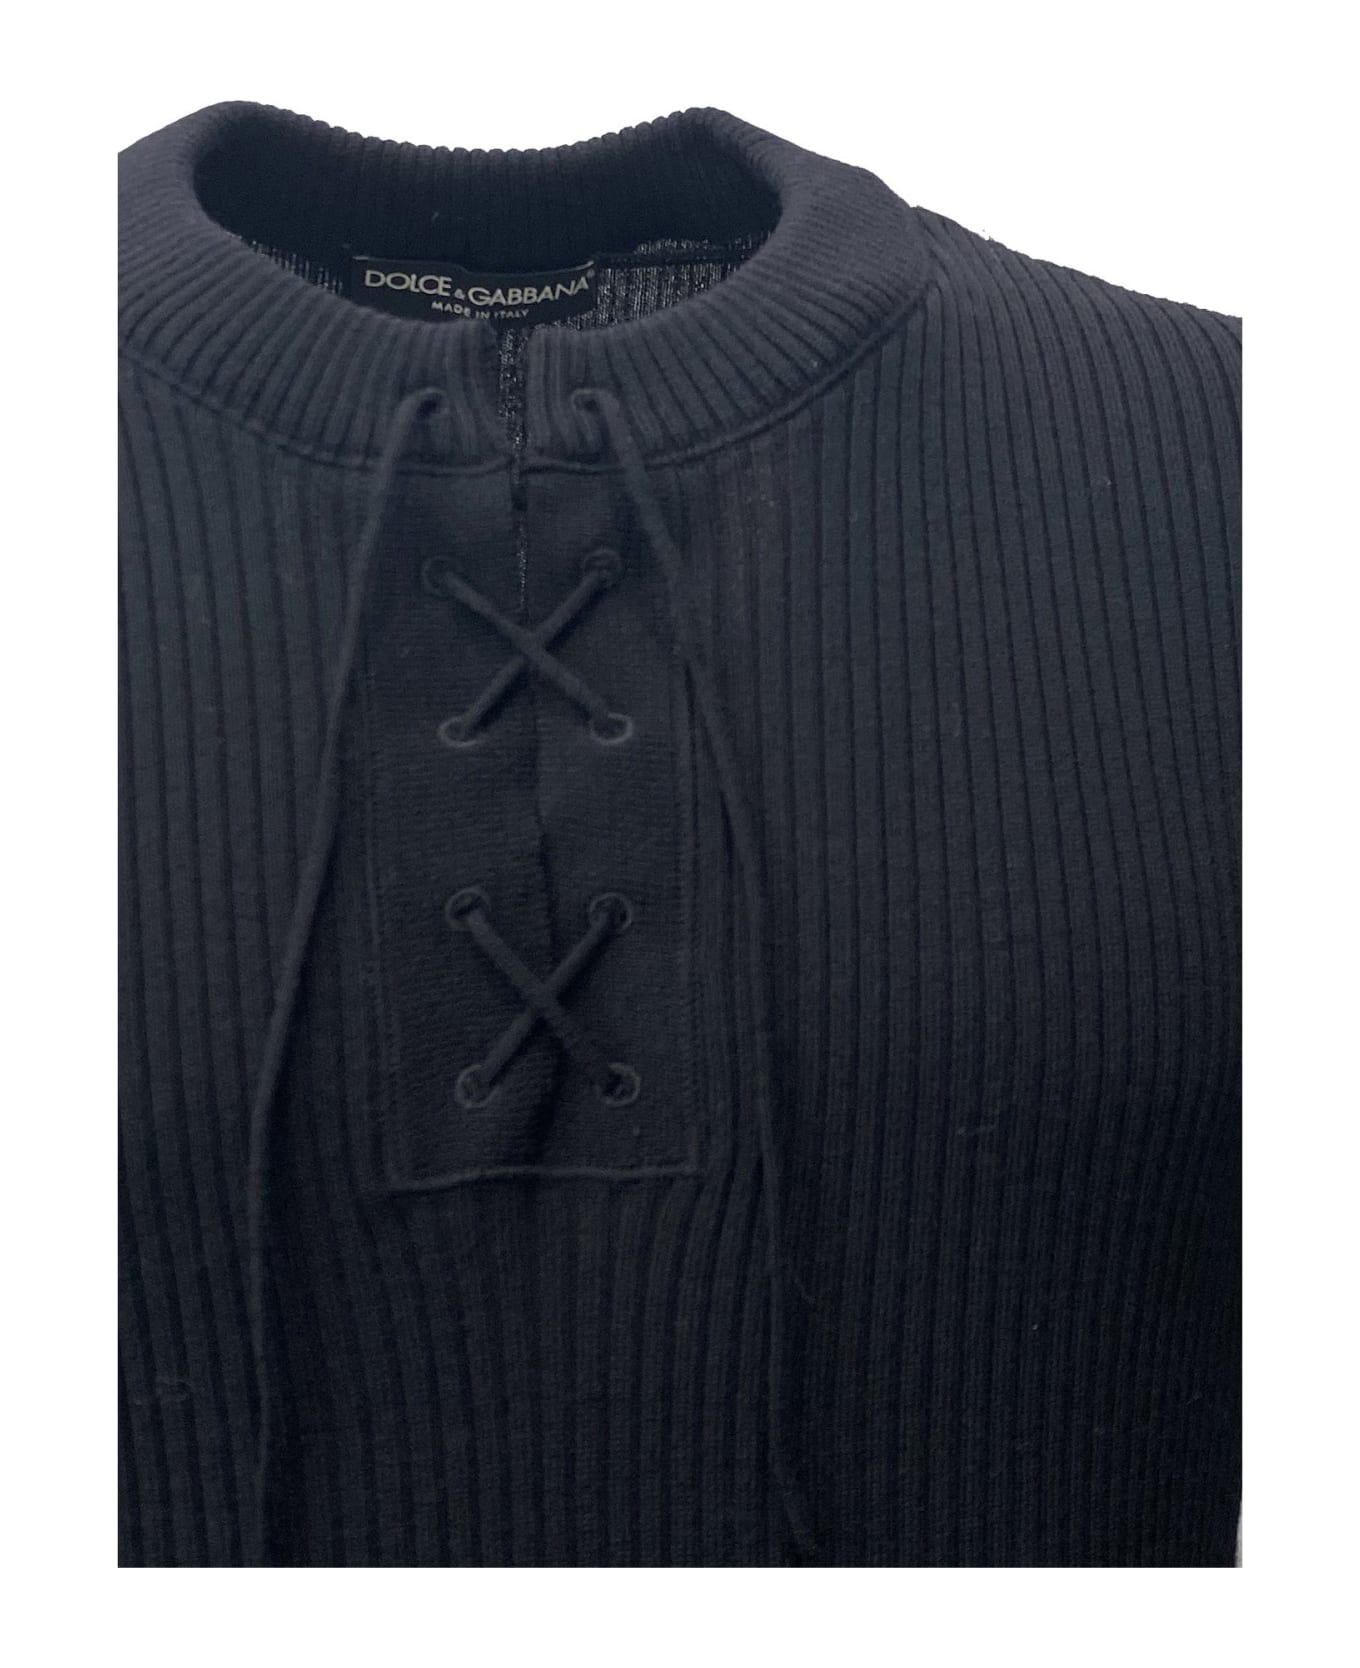 Dolce & Gabbana Ribbed Wool Knit - Black